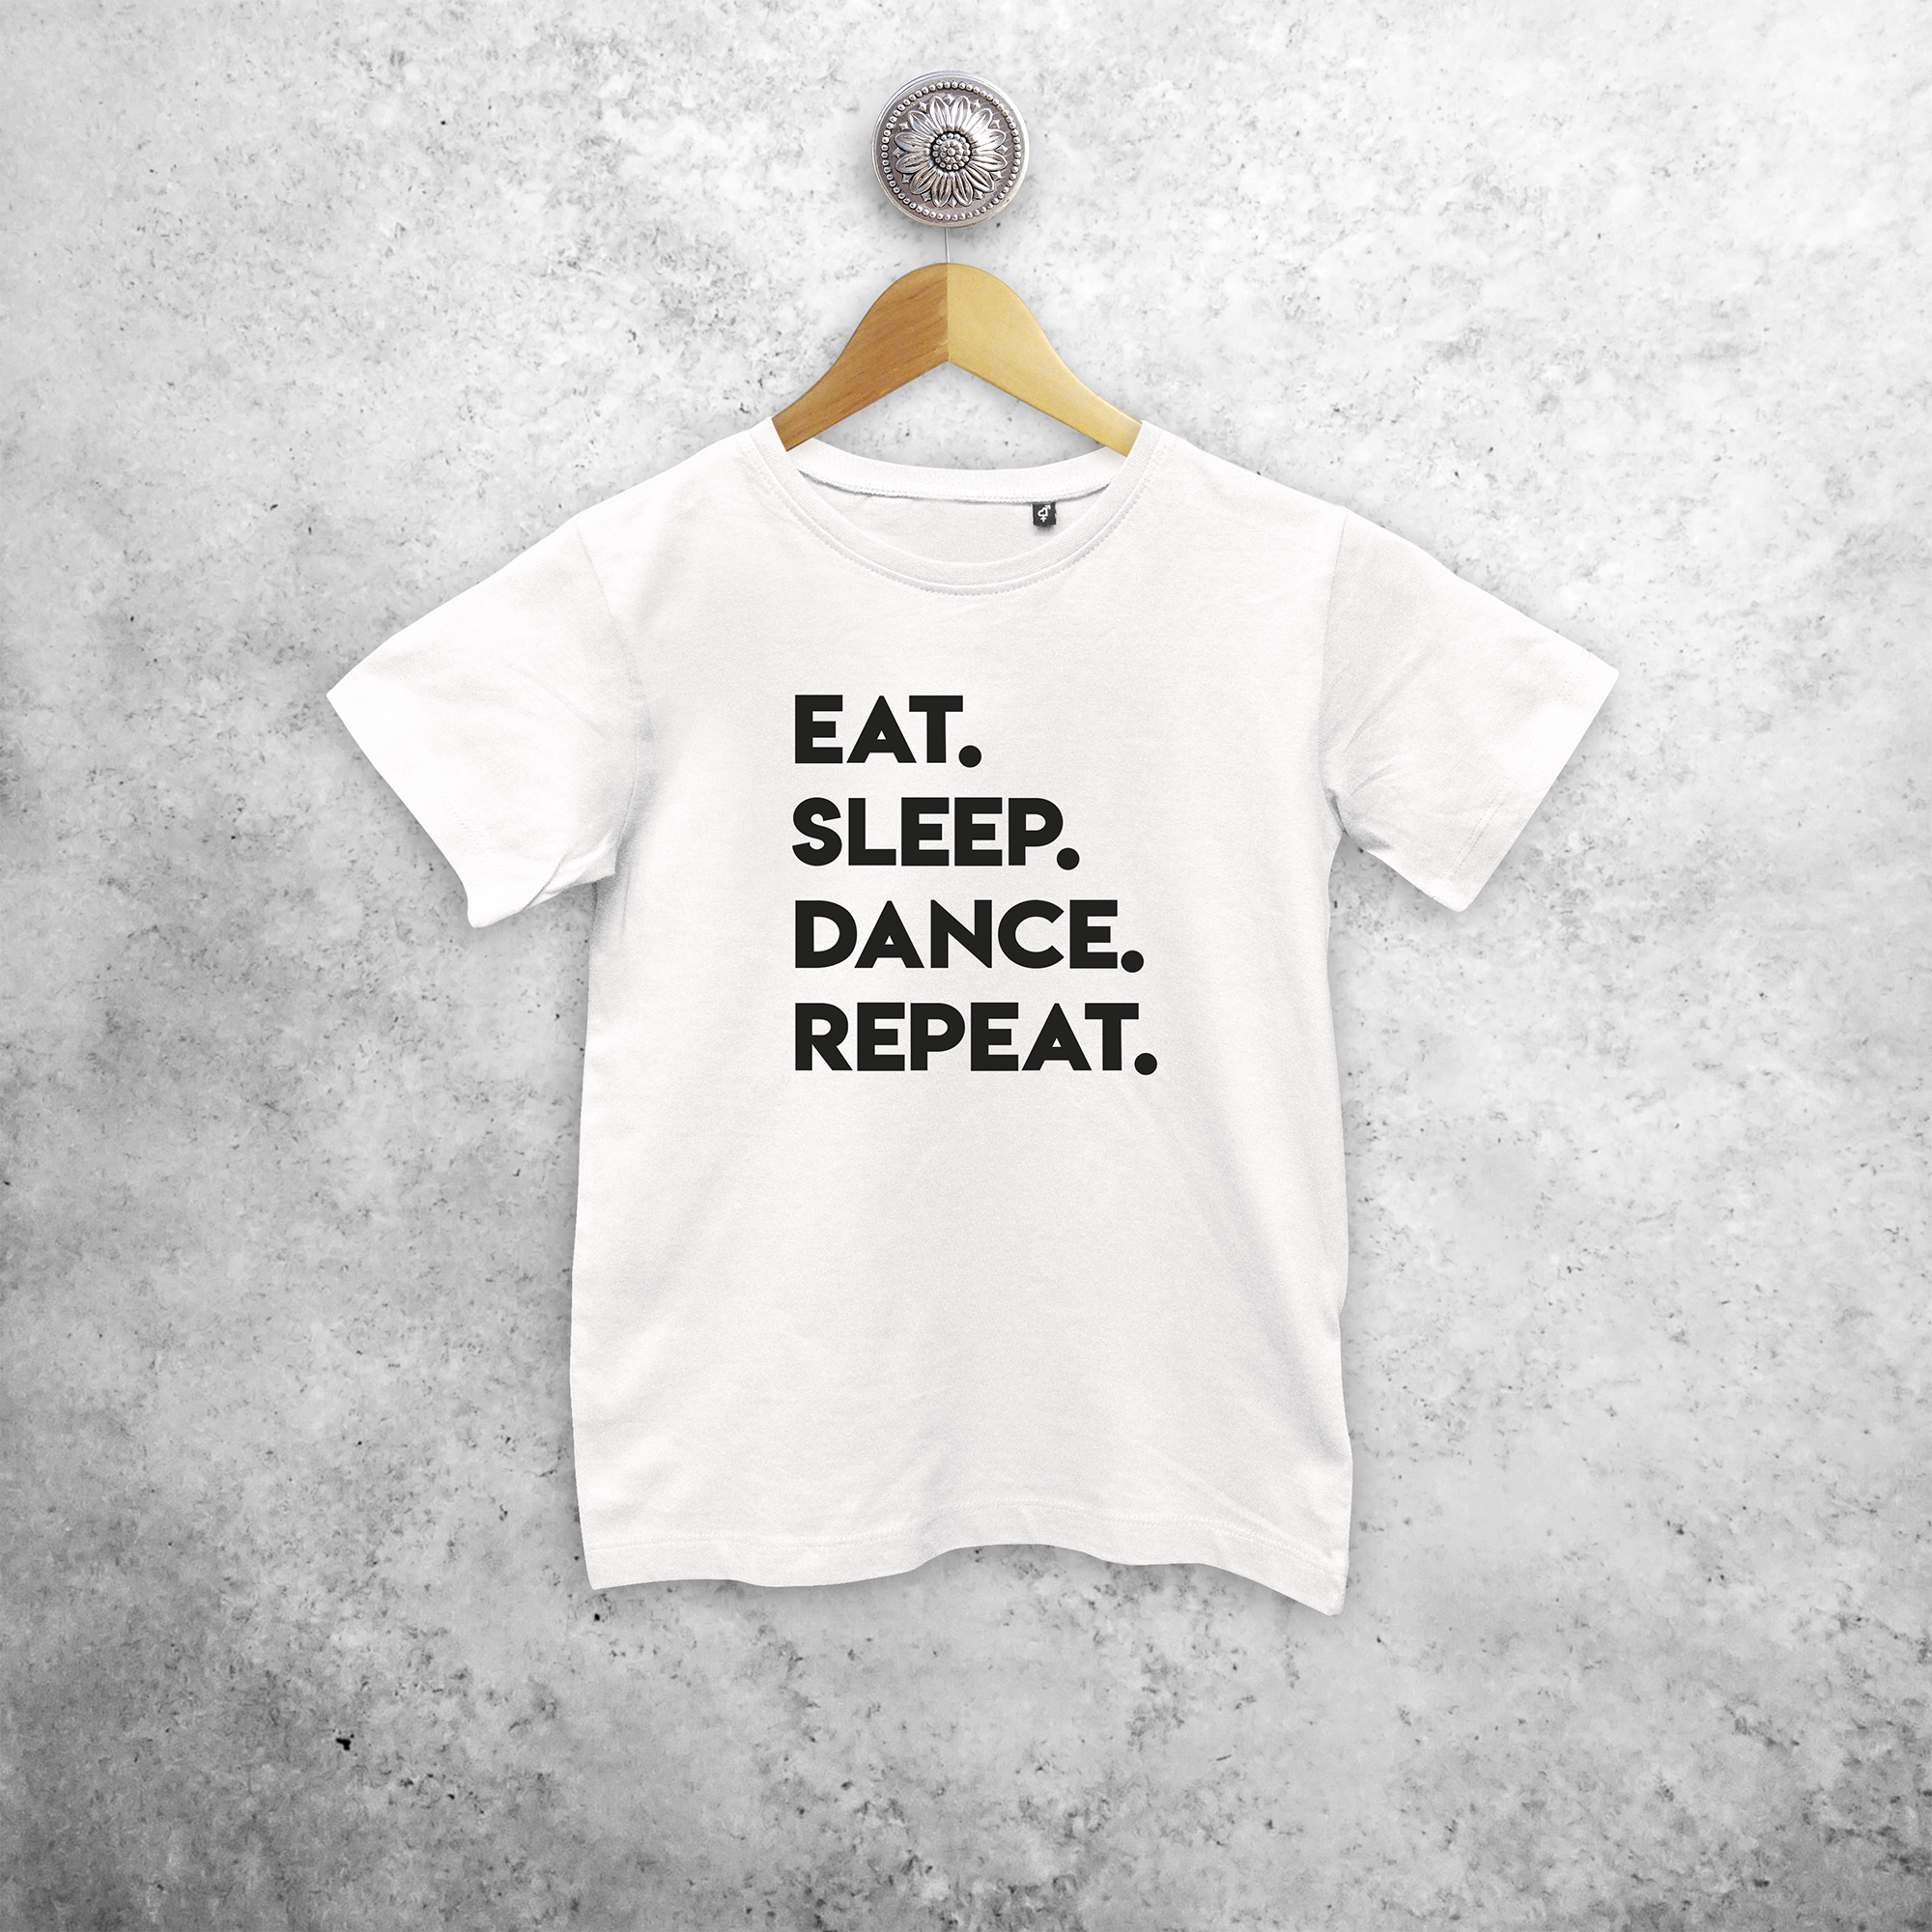 'Eat. Sleep. Dance. Repeat.' kids shortsleeve shirt